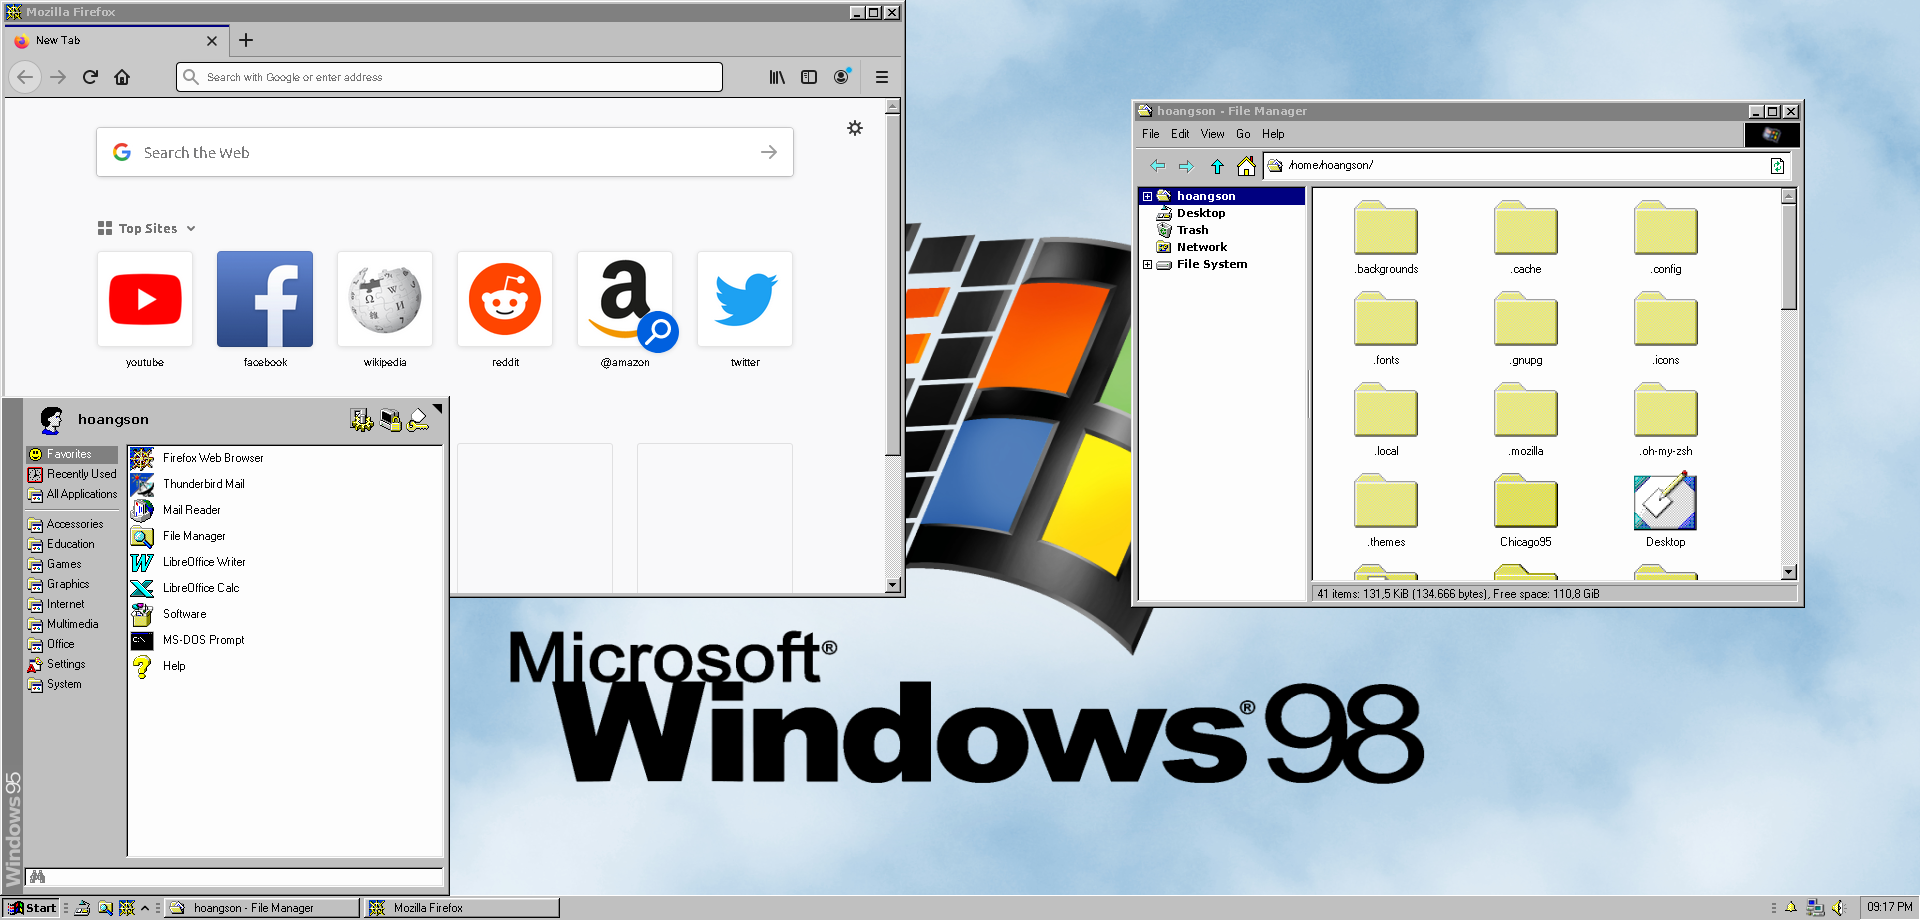 Windows 98 4K Wallpapers